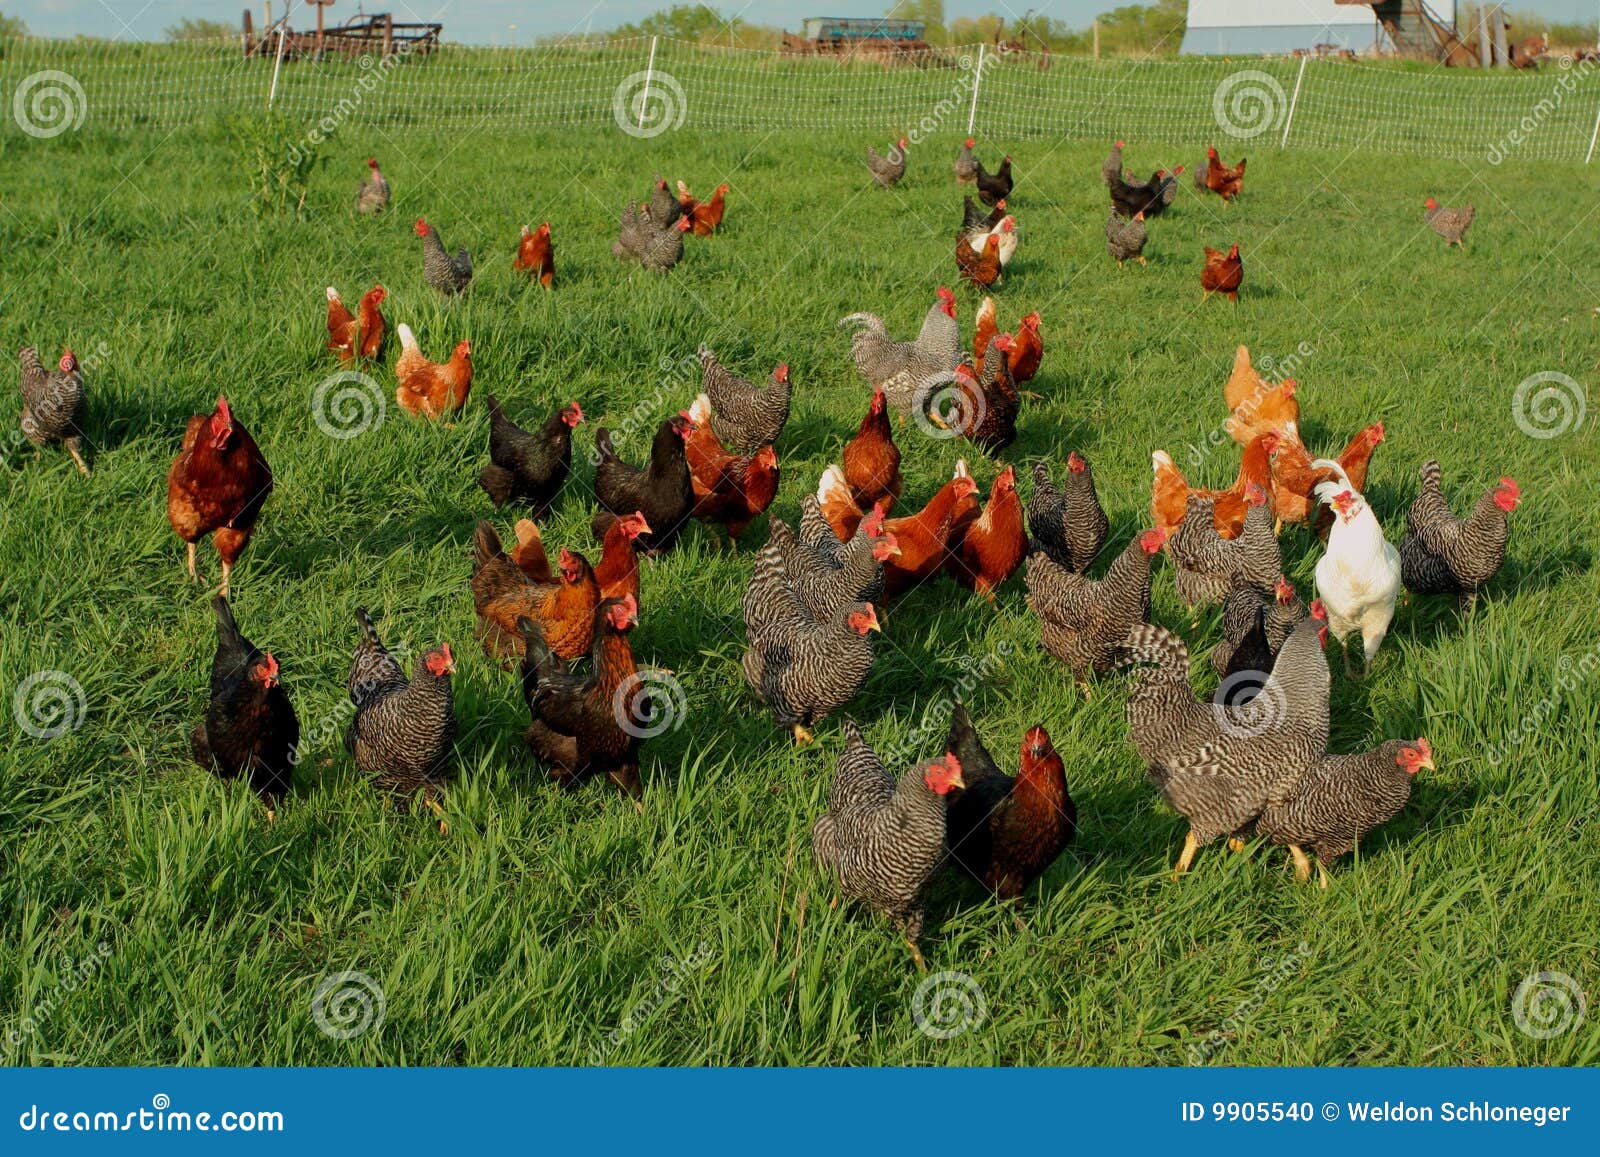 free range chickens